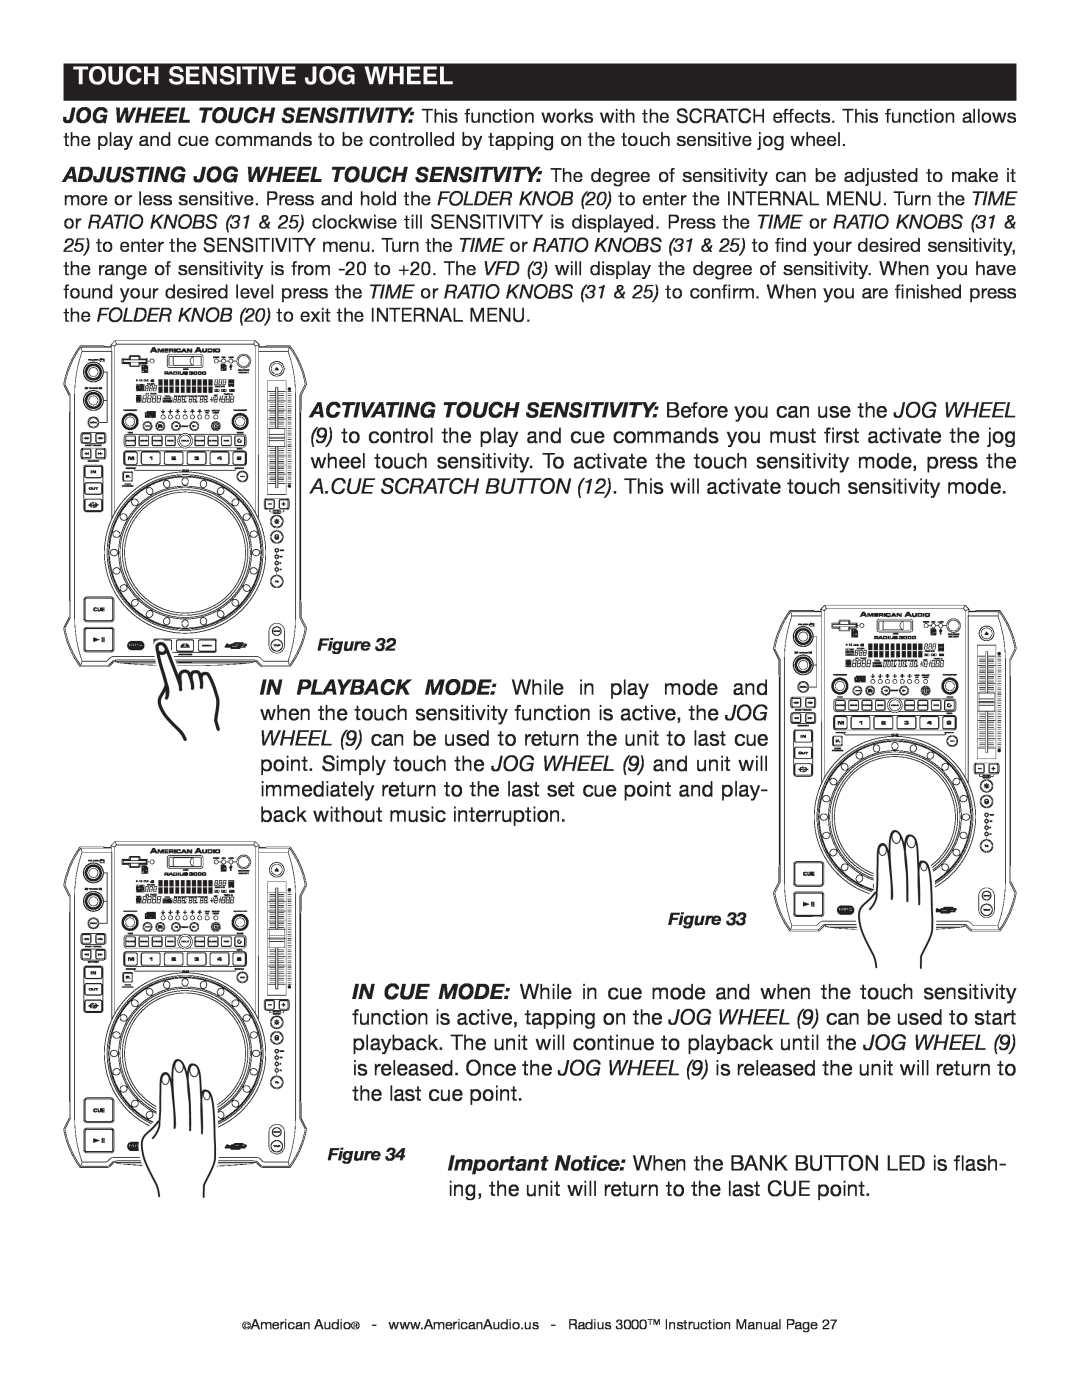 American Audio Radius 3000 manual Touch Sensitive Jog Wheel 